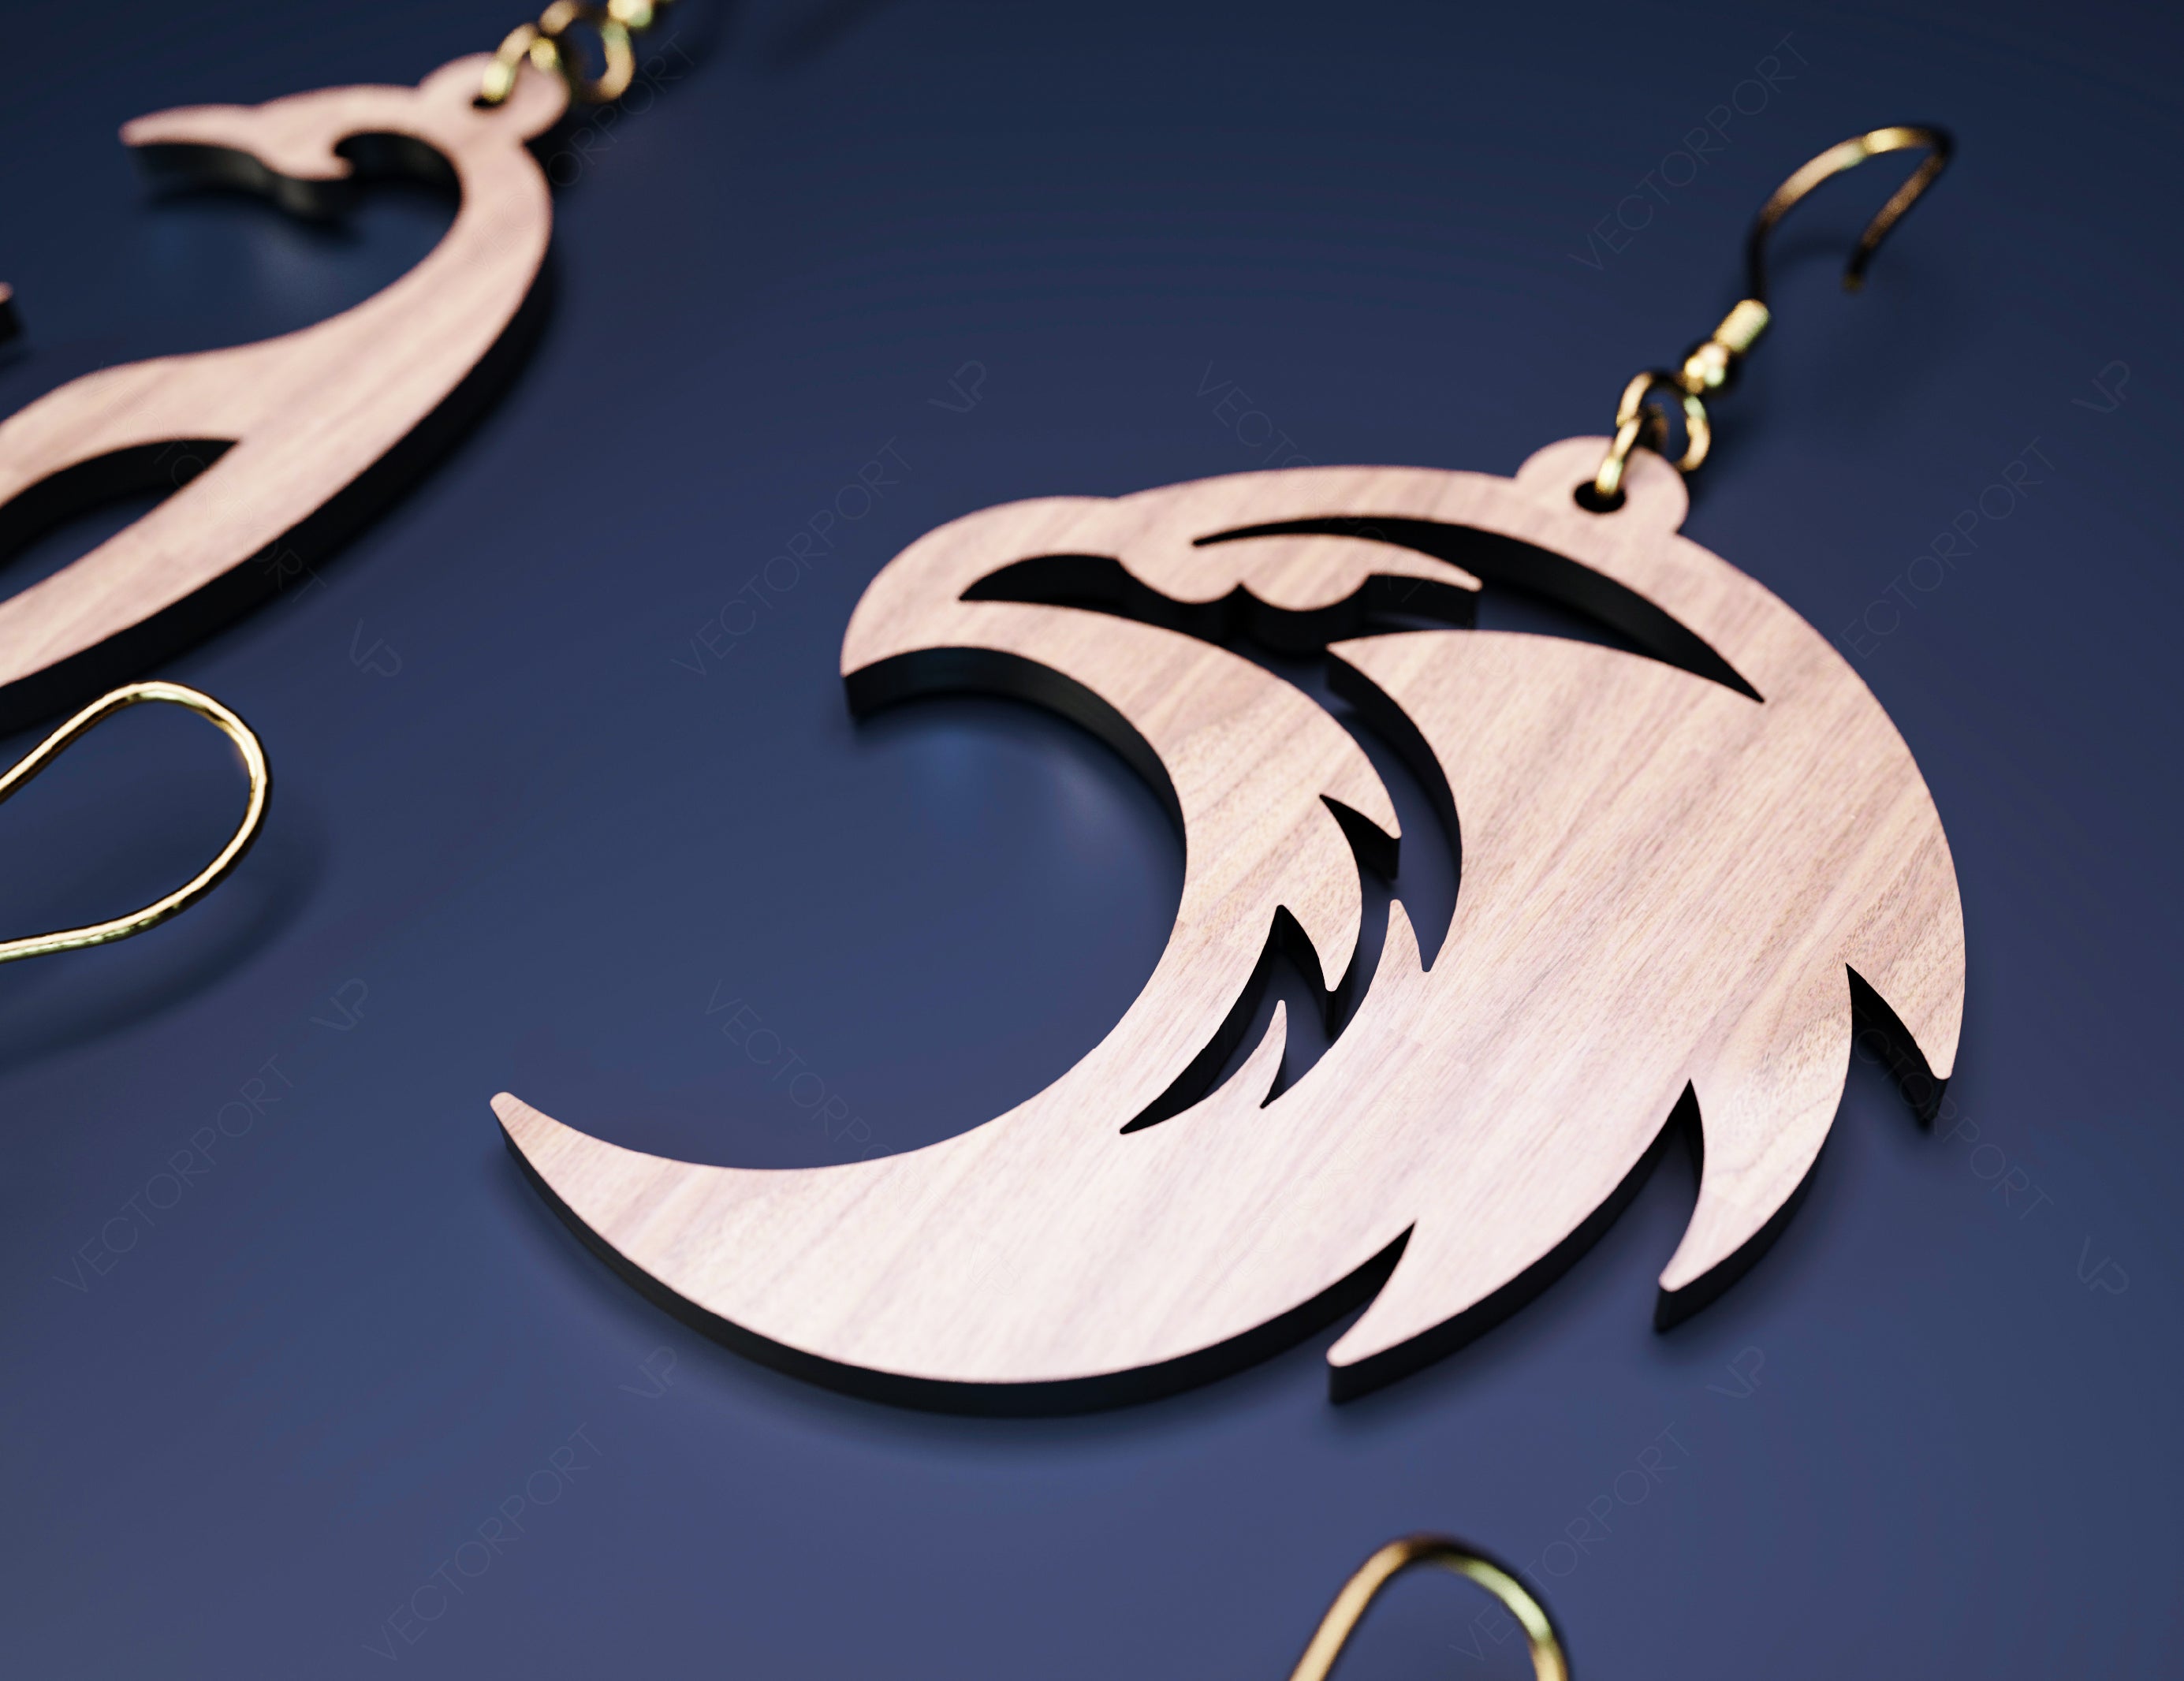 Animal Earrings Hanging 3D Wood Fox Eagle Bird Horse Shape Laser Cut for Women Jewelry Glowforge Pendants | SVG, DXF, AI |#124|